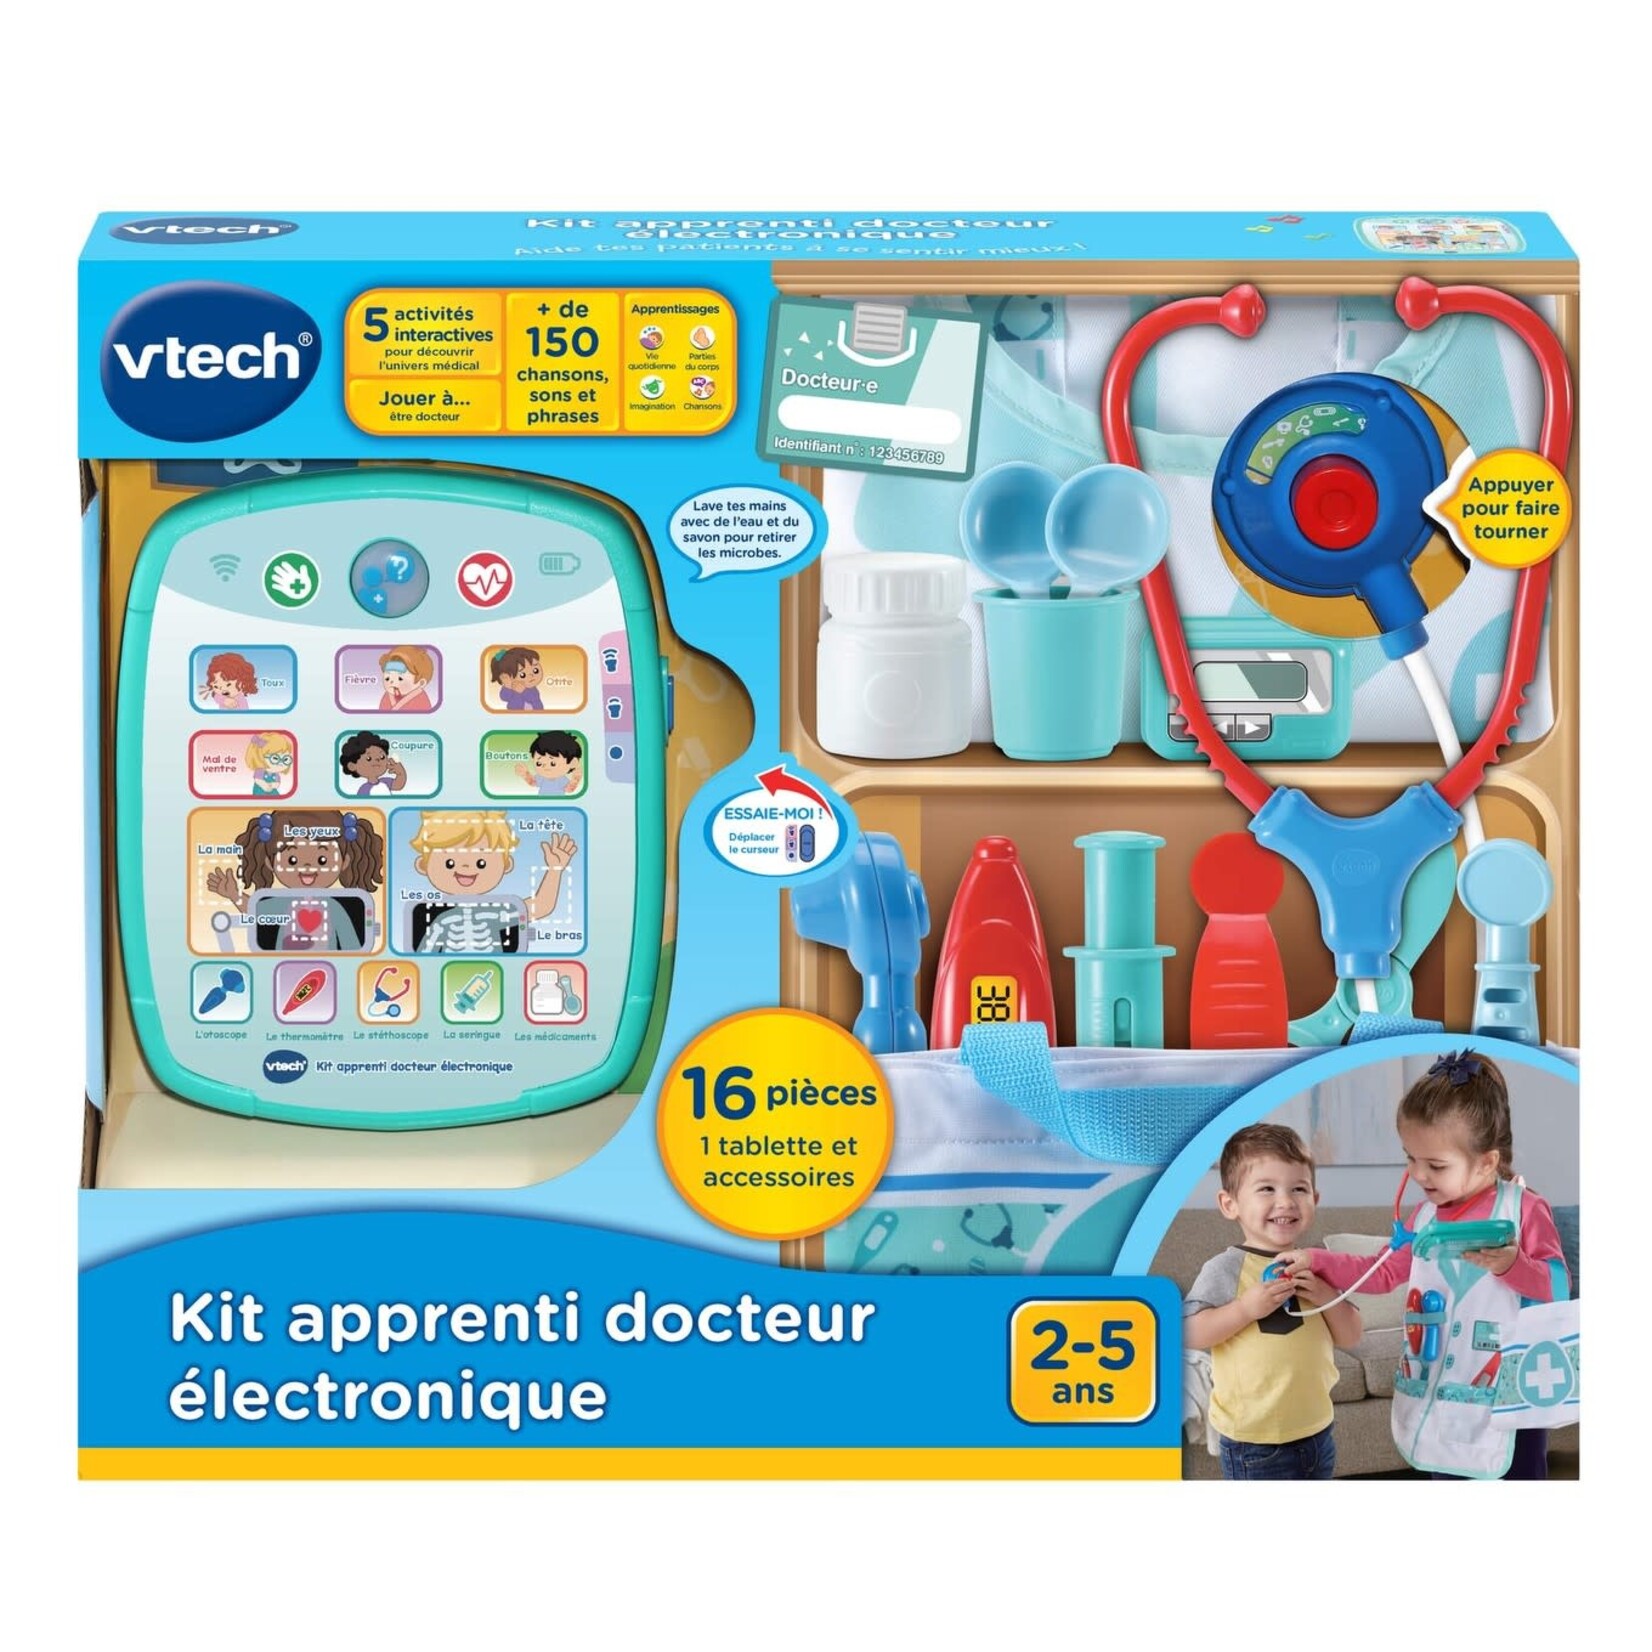 VTech VTech - Kit apprenti docteur électronique